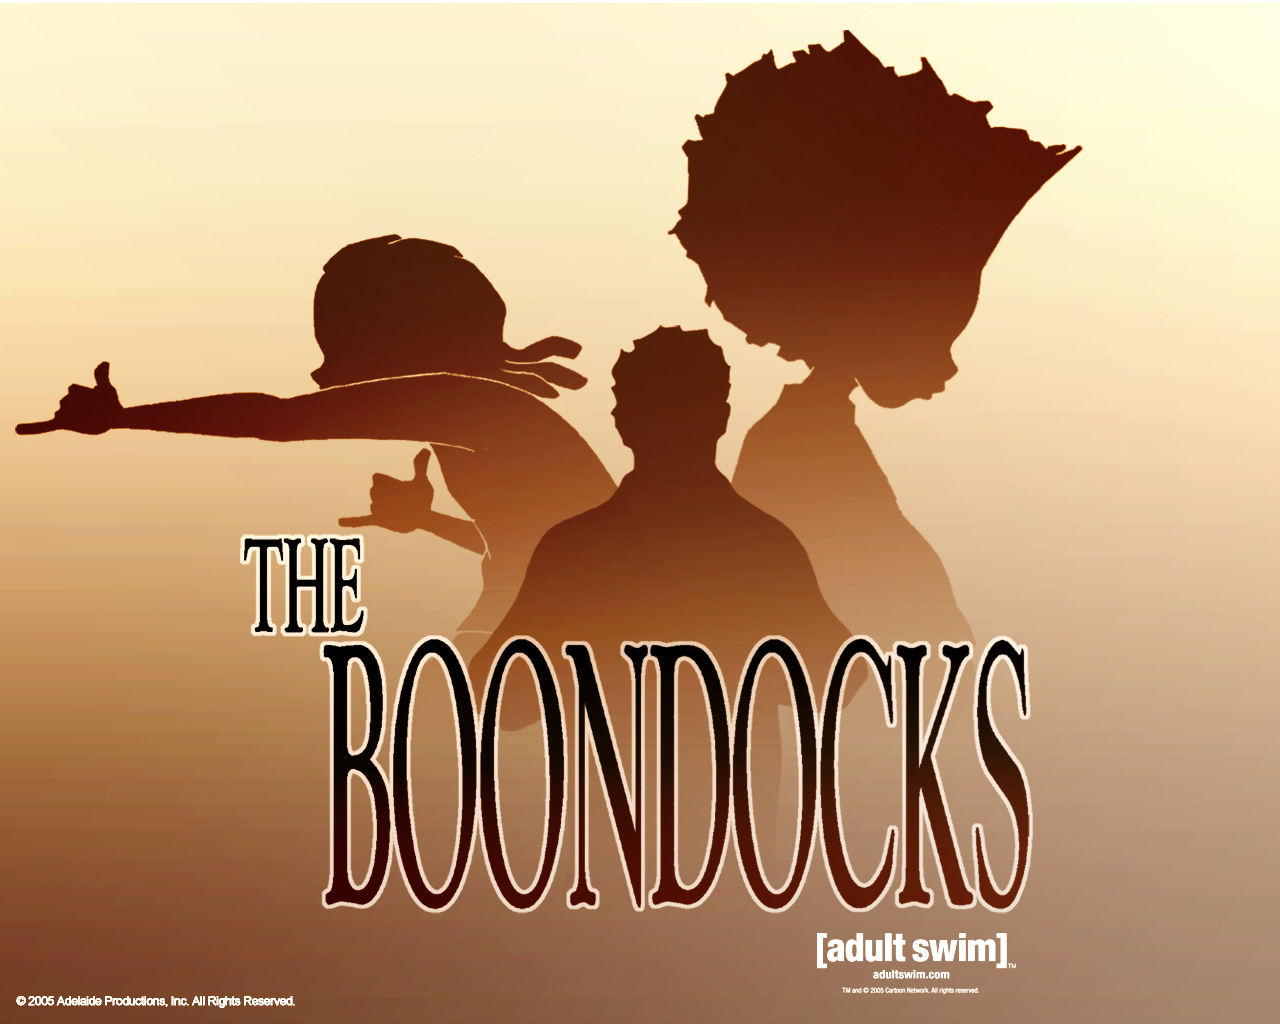 The Boondocks (Unaired Pilot) - The Boondocks (found Fox pilot of Adult Swim animated series based on comic strip; 2003-2004)